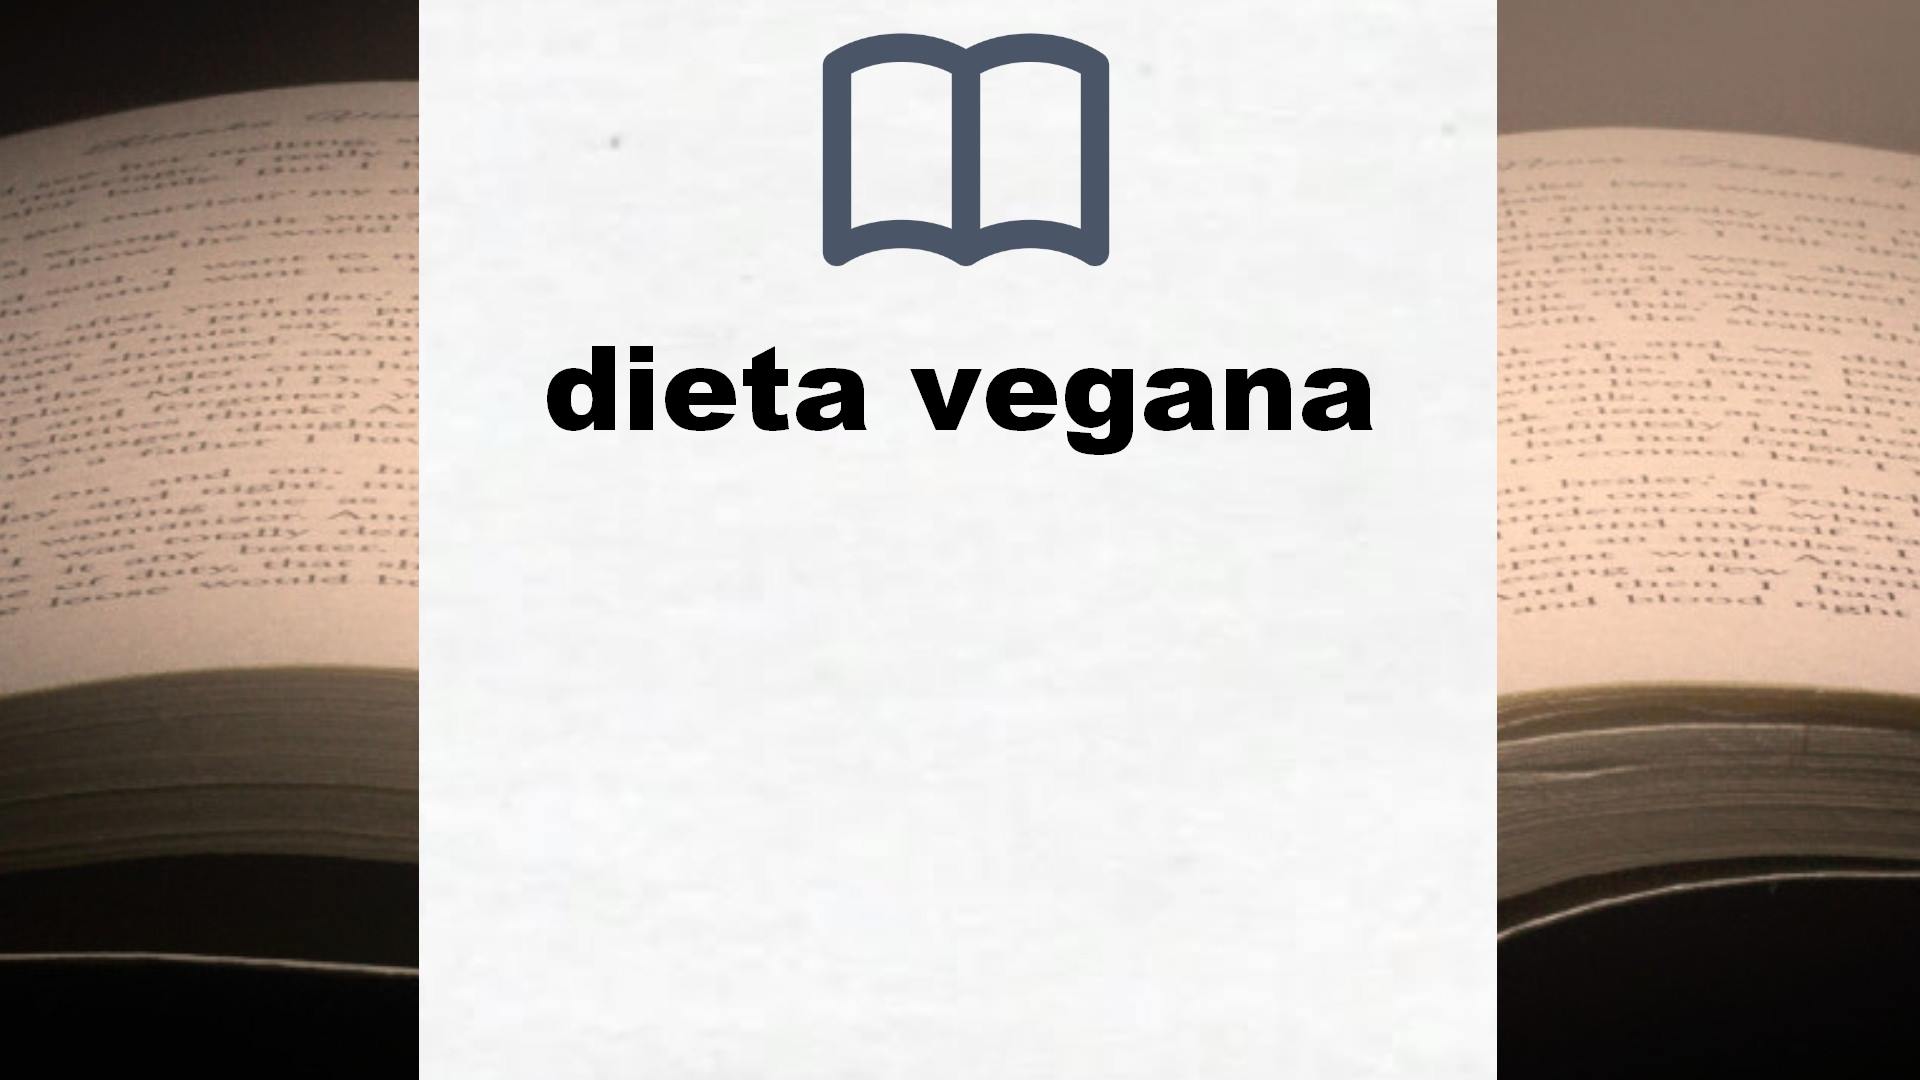 Libros sobre dieta vegana